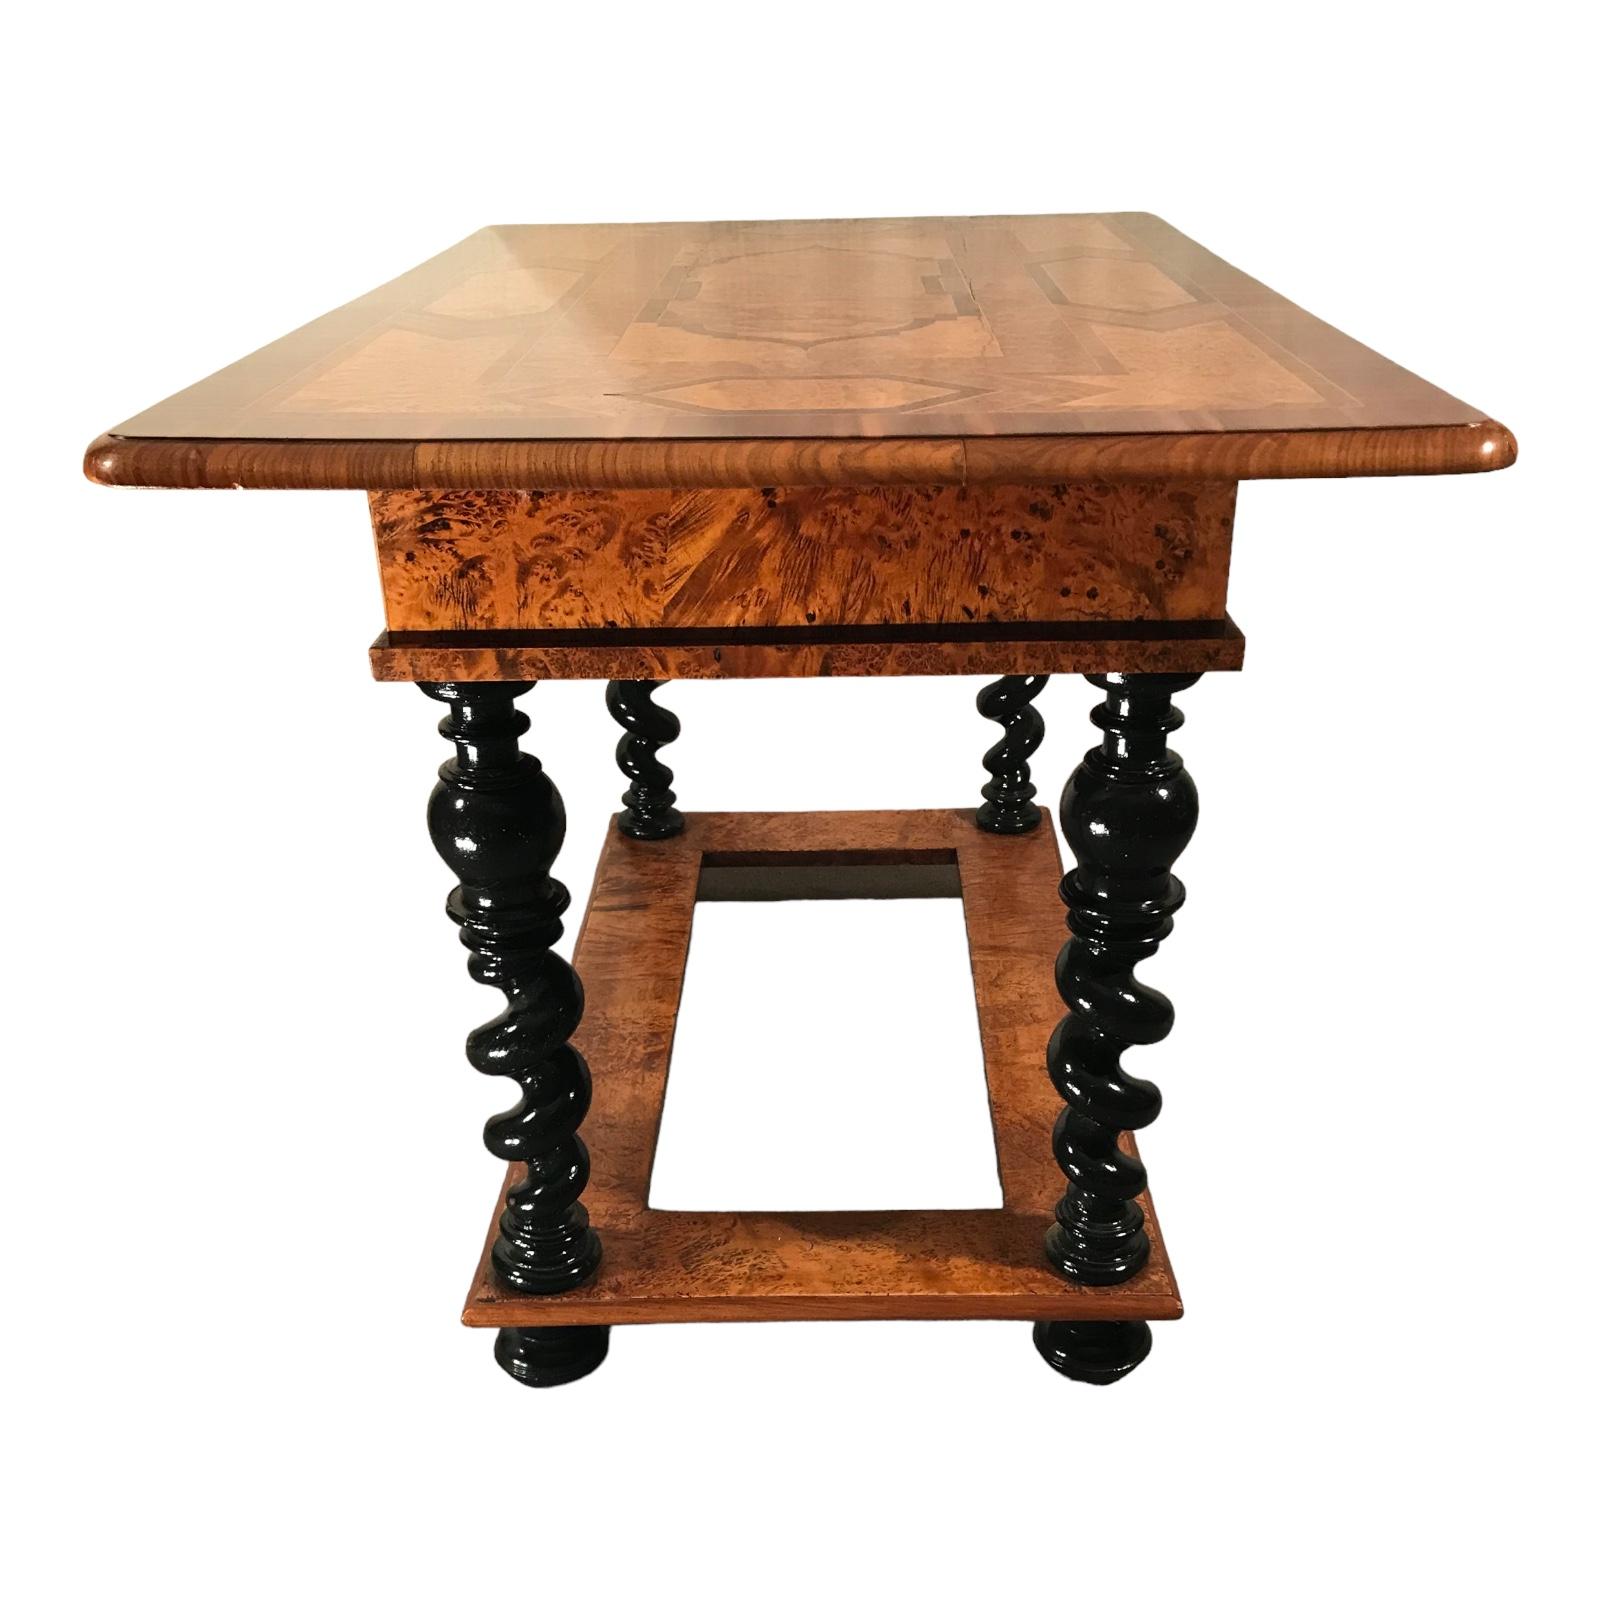 Birdseye Maple Baroque Center Table, Germany 18th century